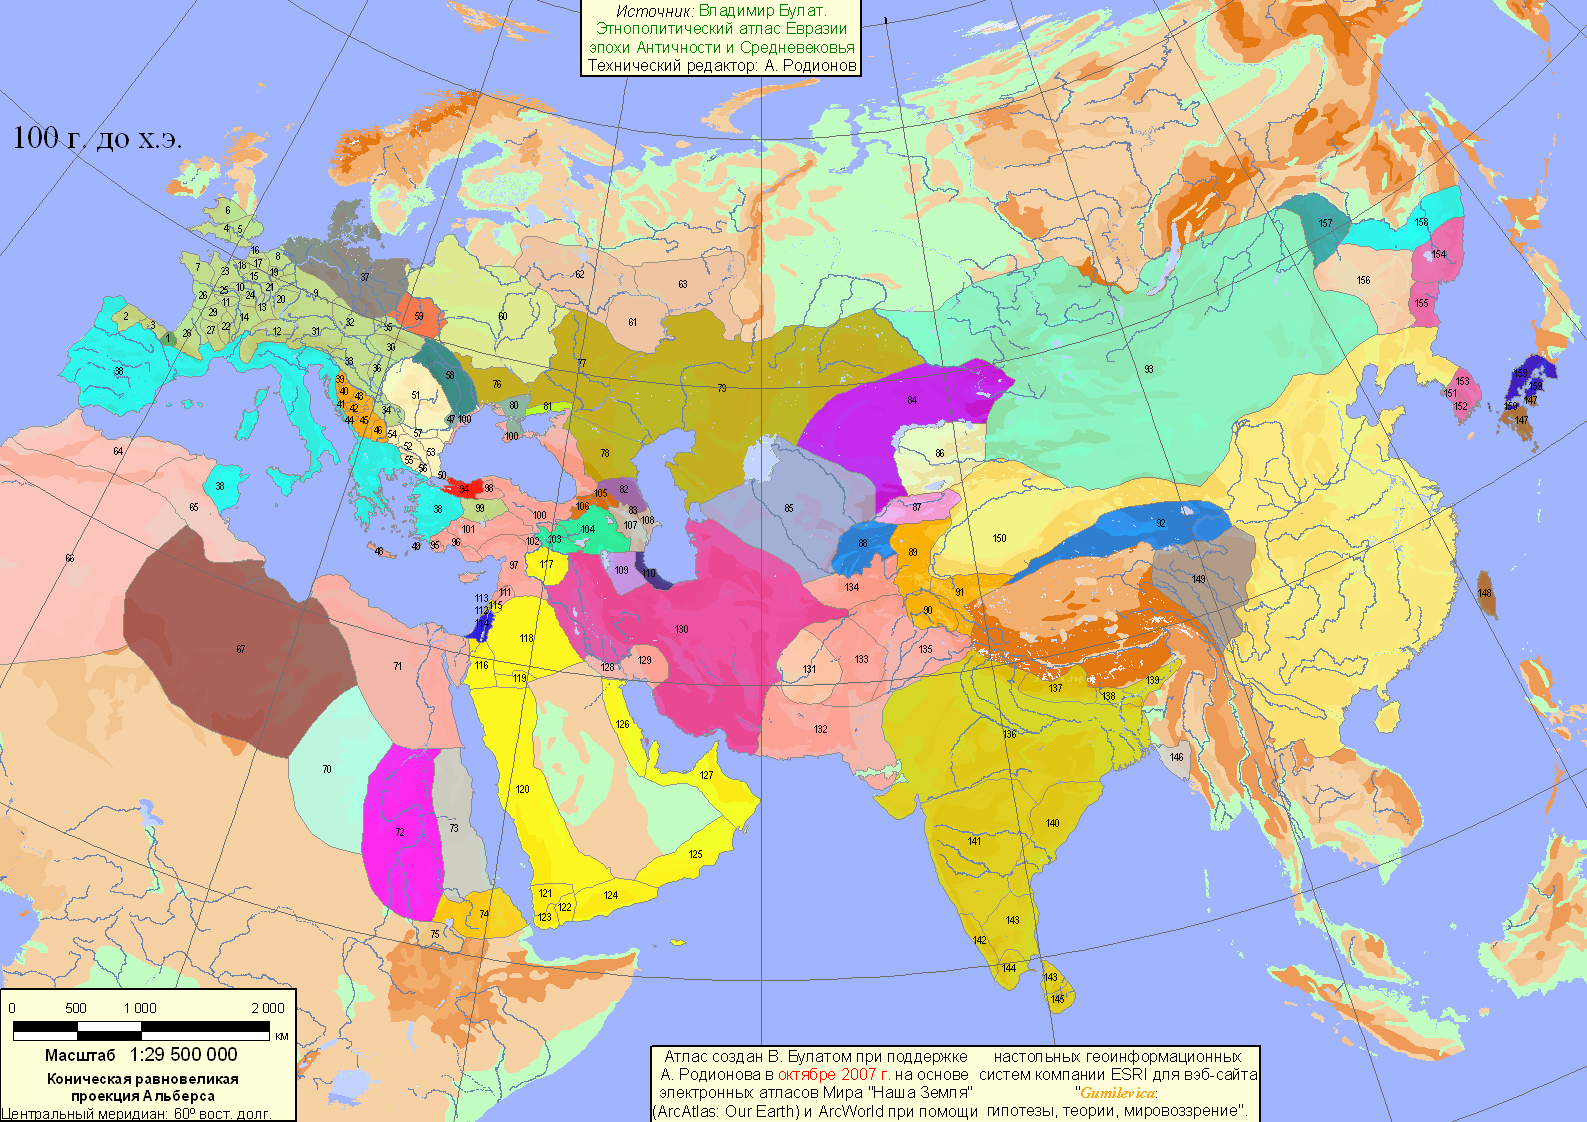 Eurasia - 100 BC (307 Kbytes)